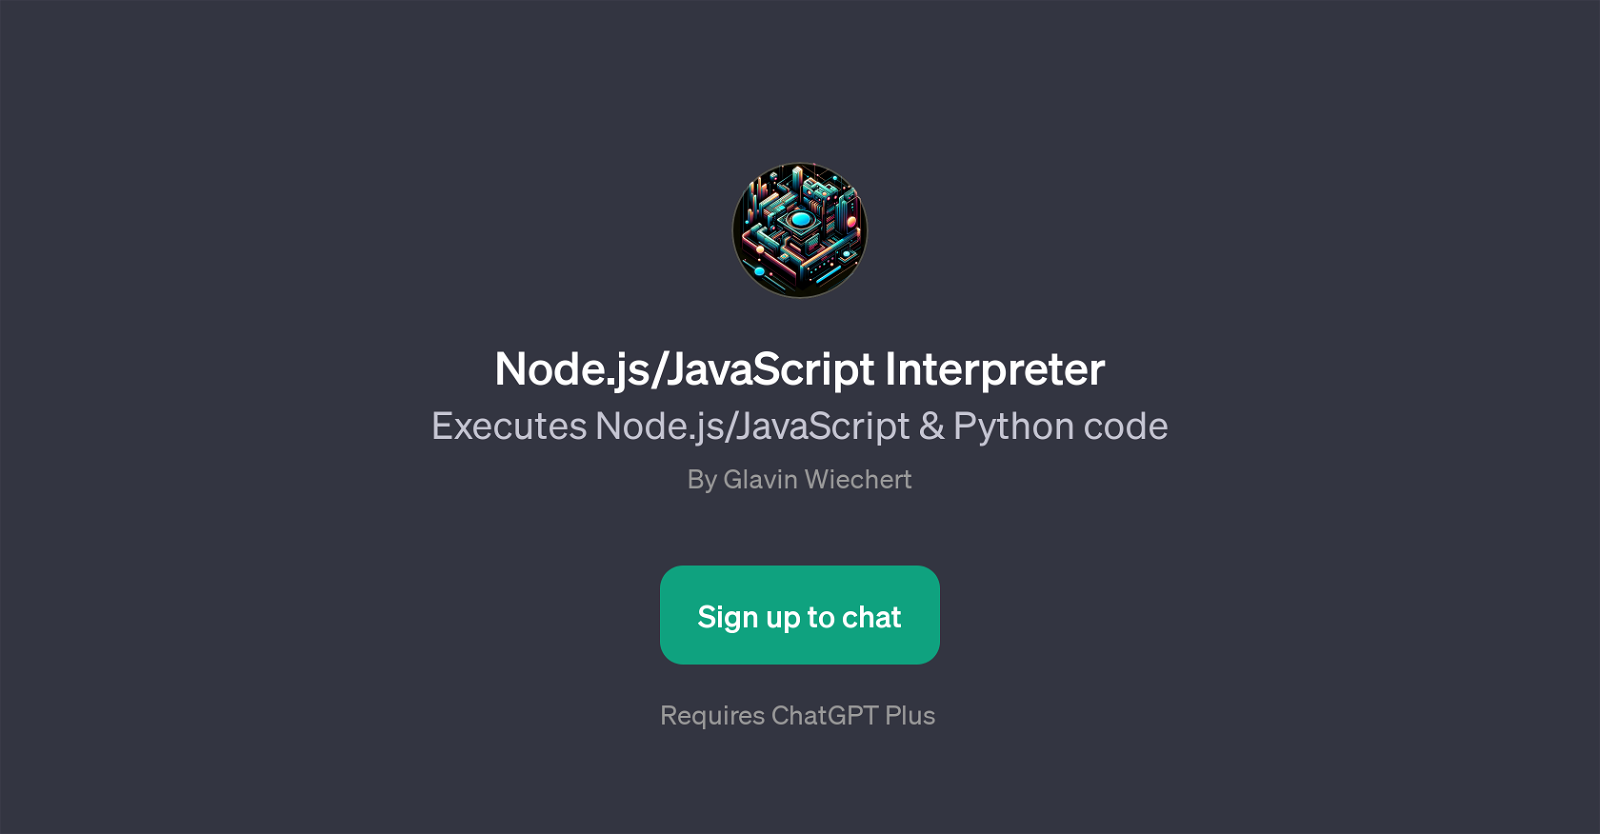 Node.js/JavaScript Interpreter GPT website